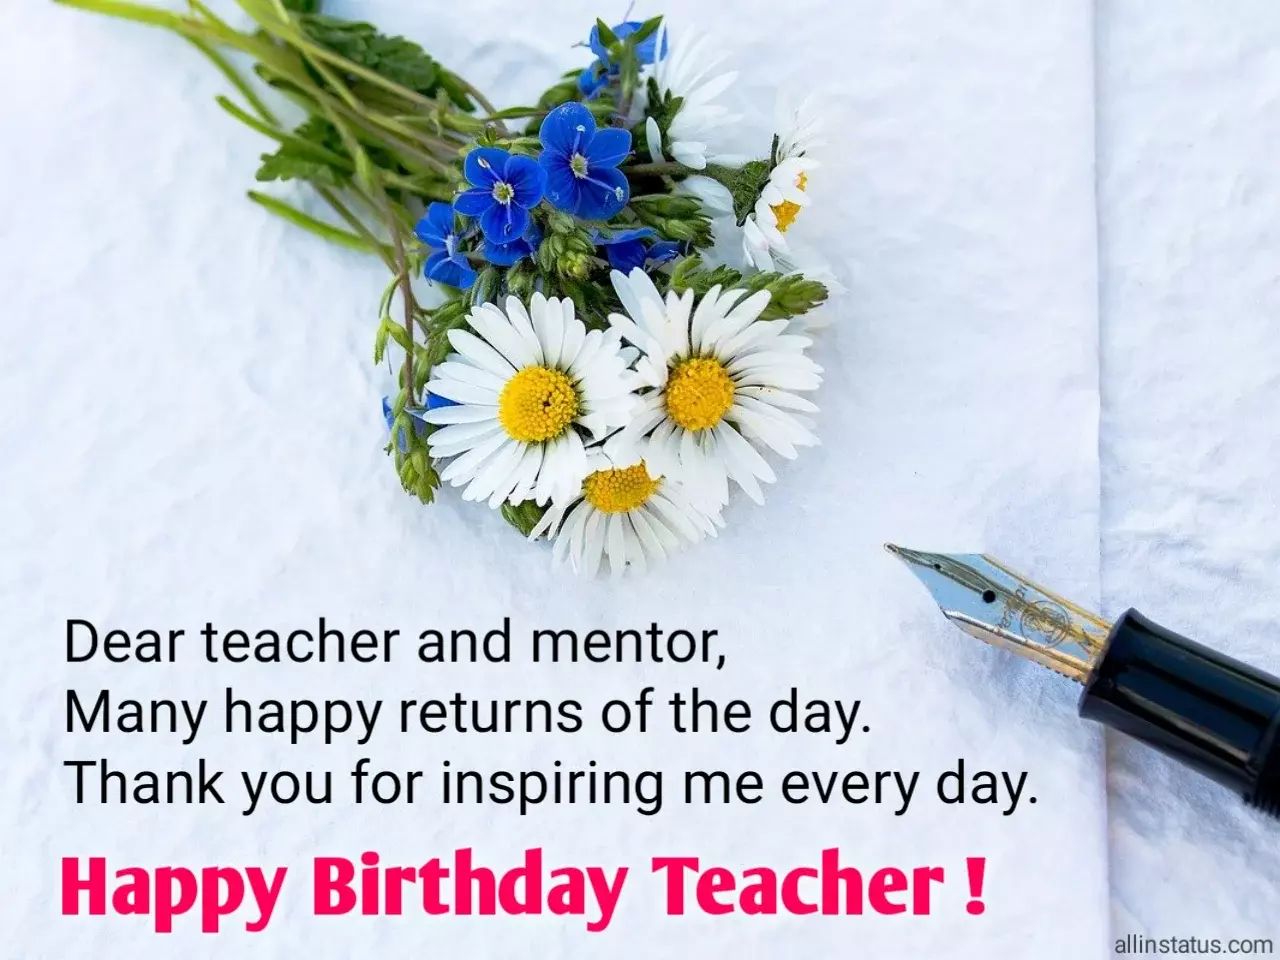 Happy Birthday Wishes for Teacher